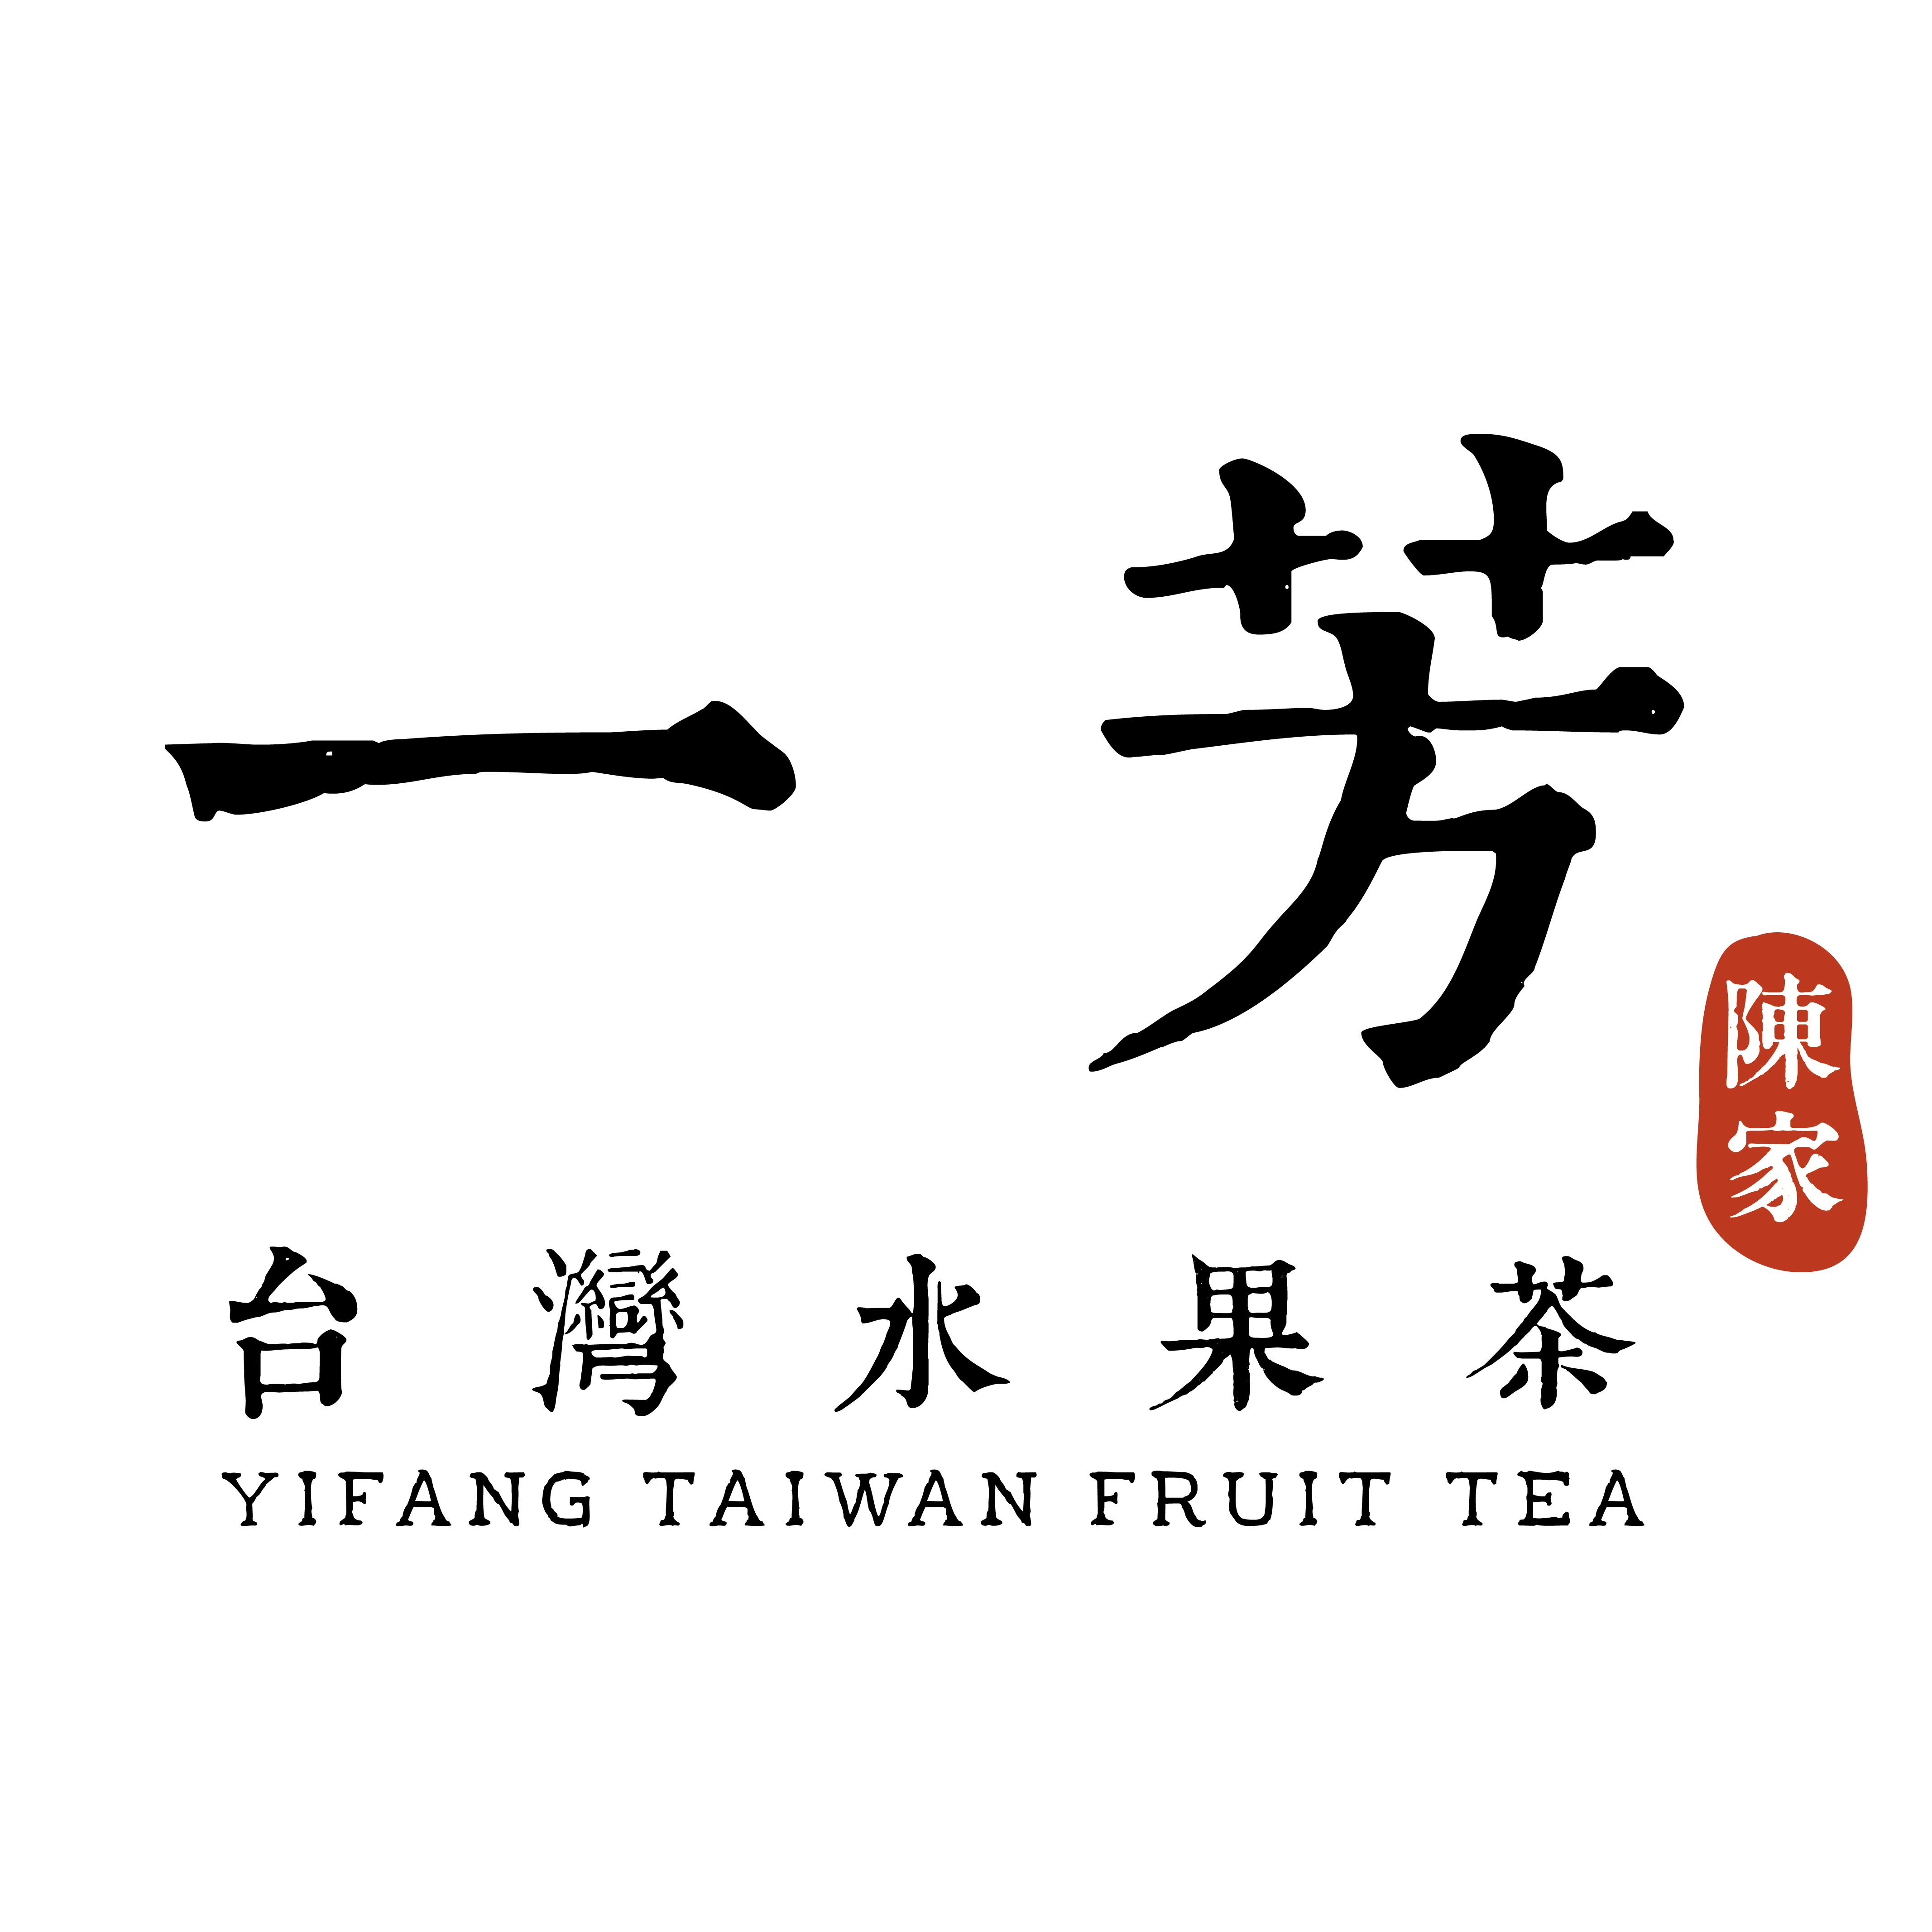 一芳YI FANG 台灣水果茶 LOGO